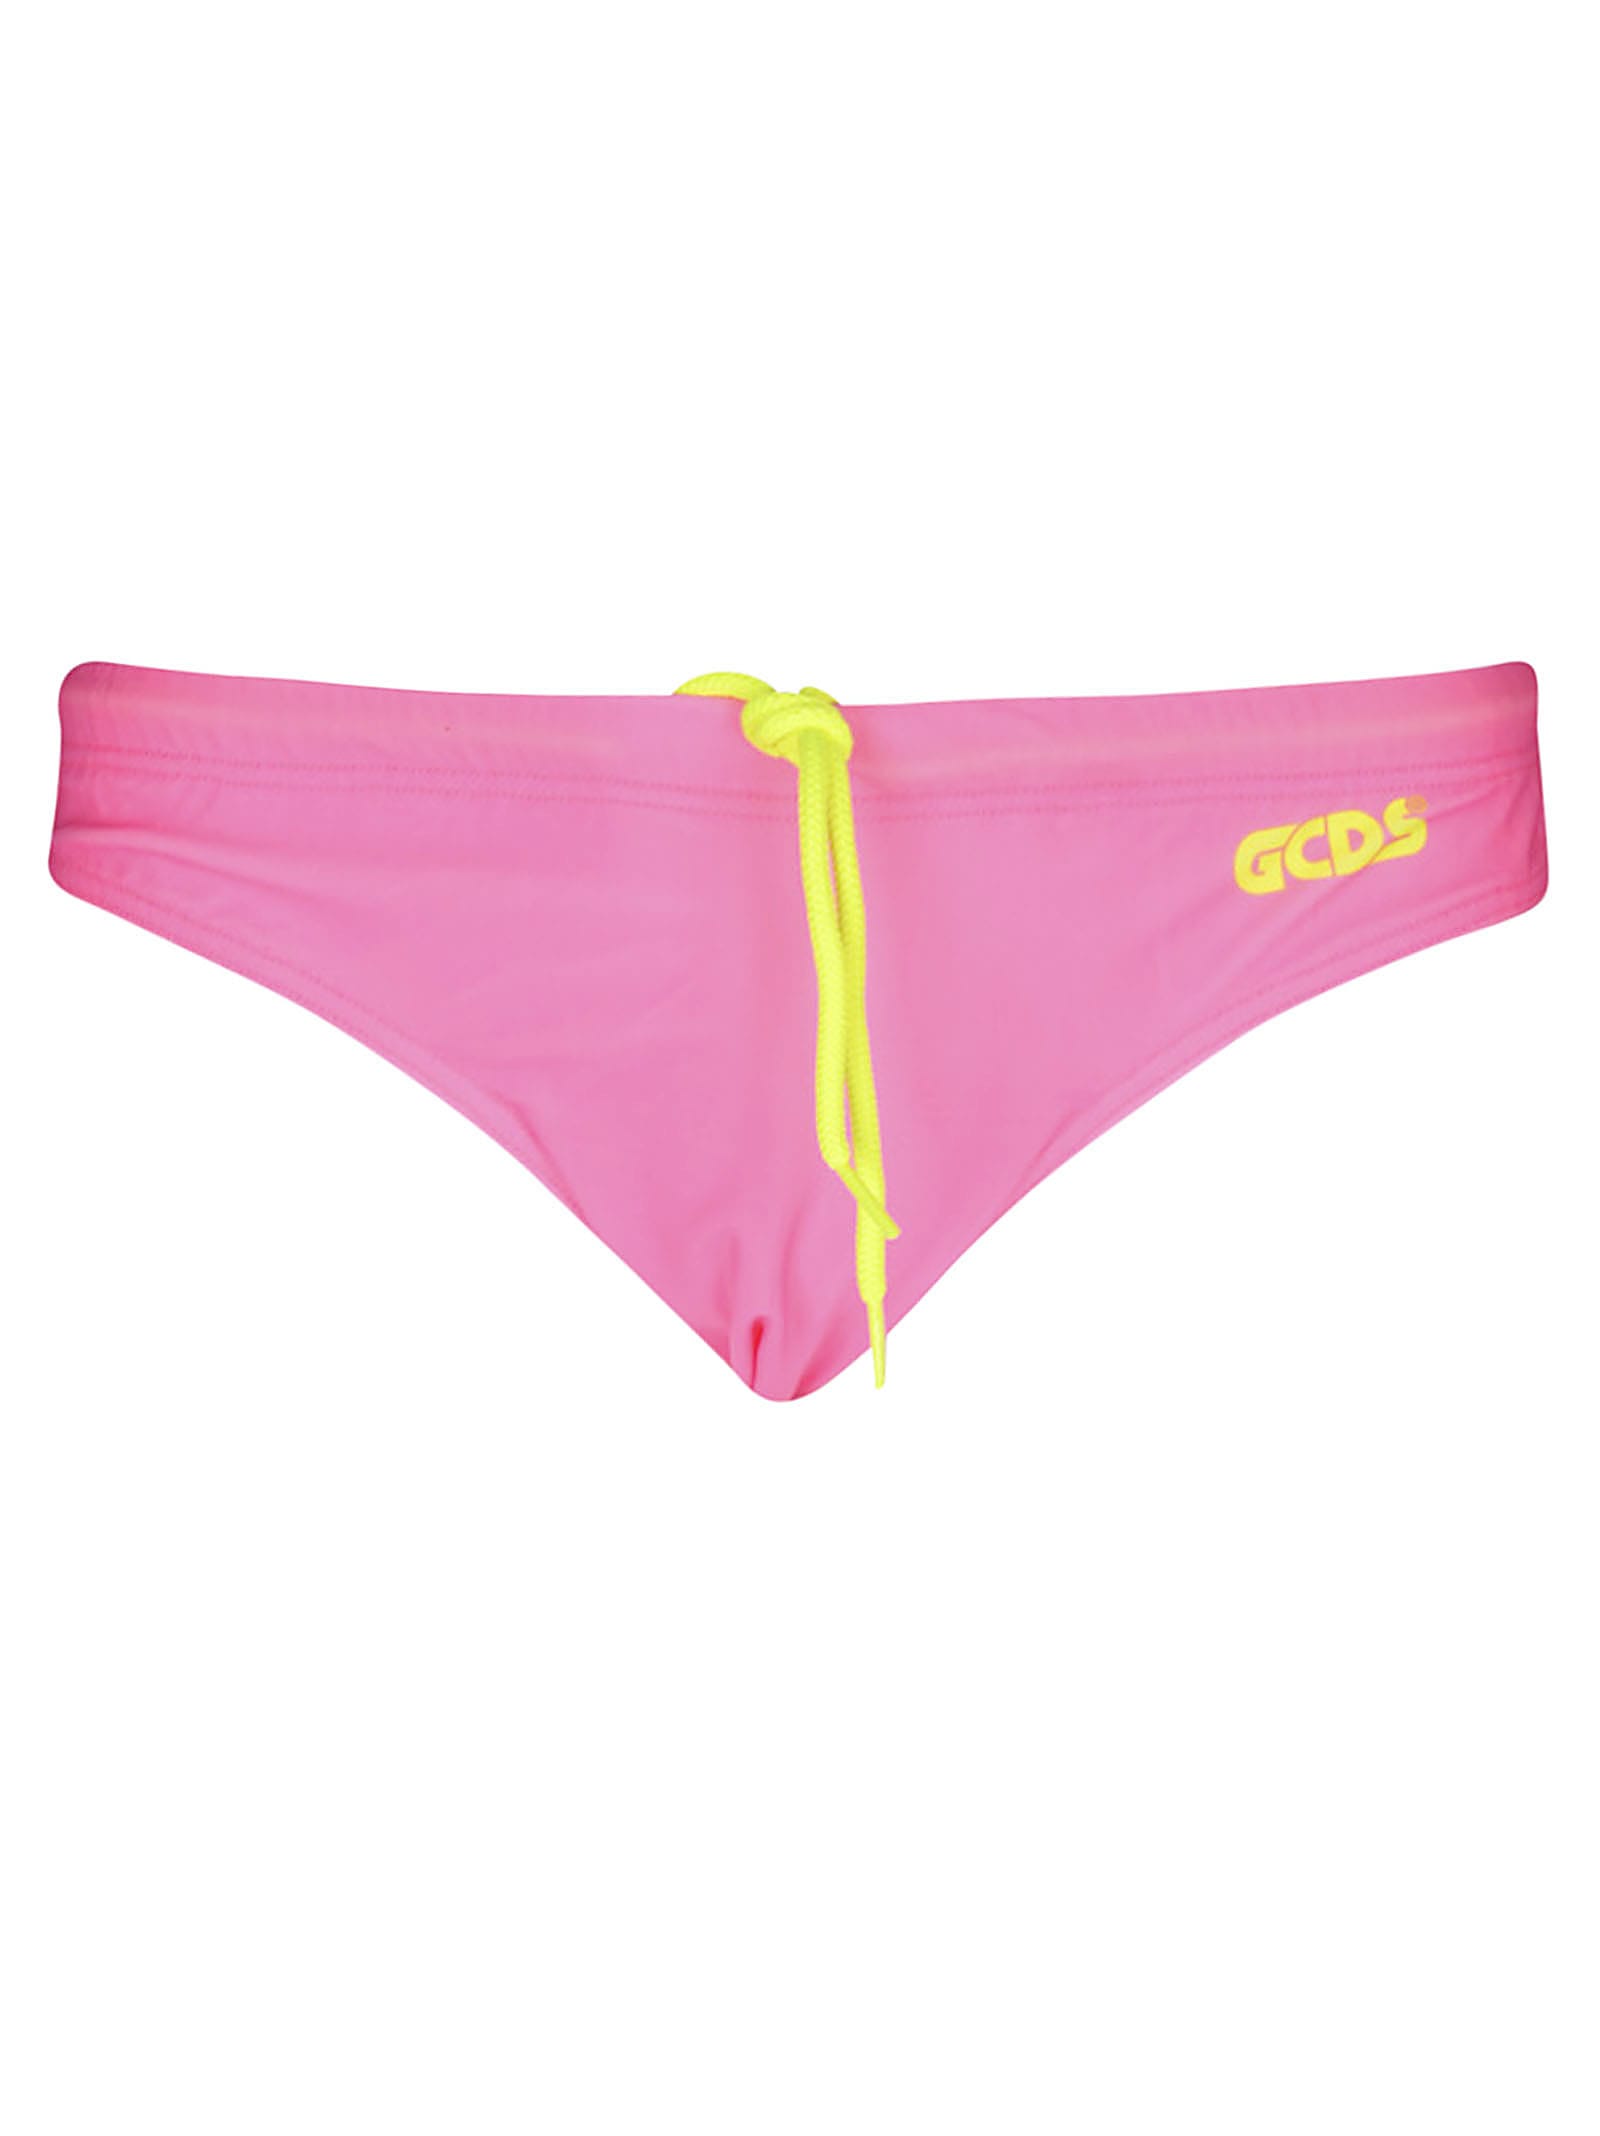 Gcds Logo Print Swim Briefs In Pink